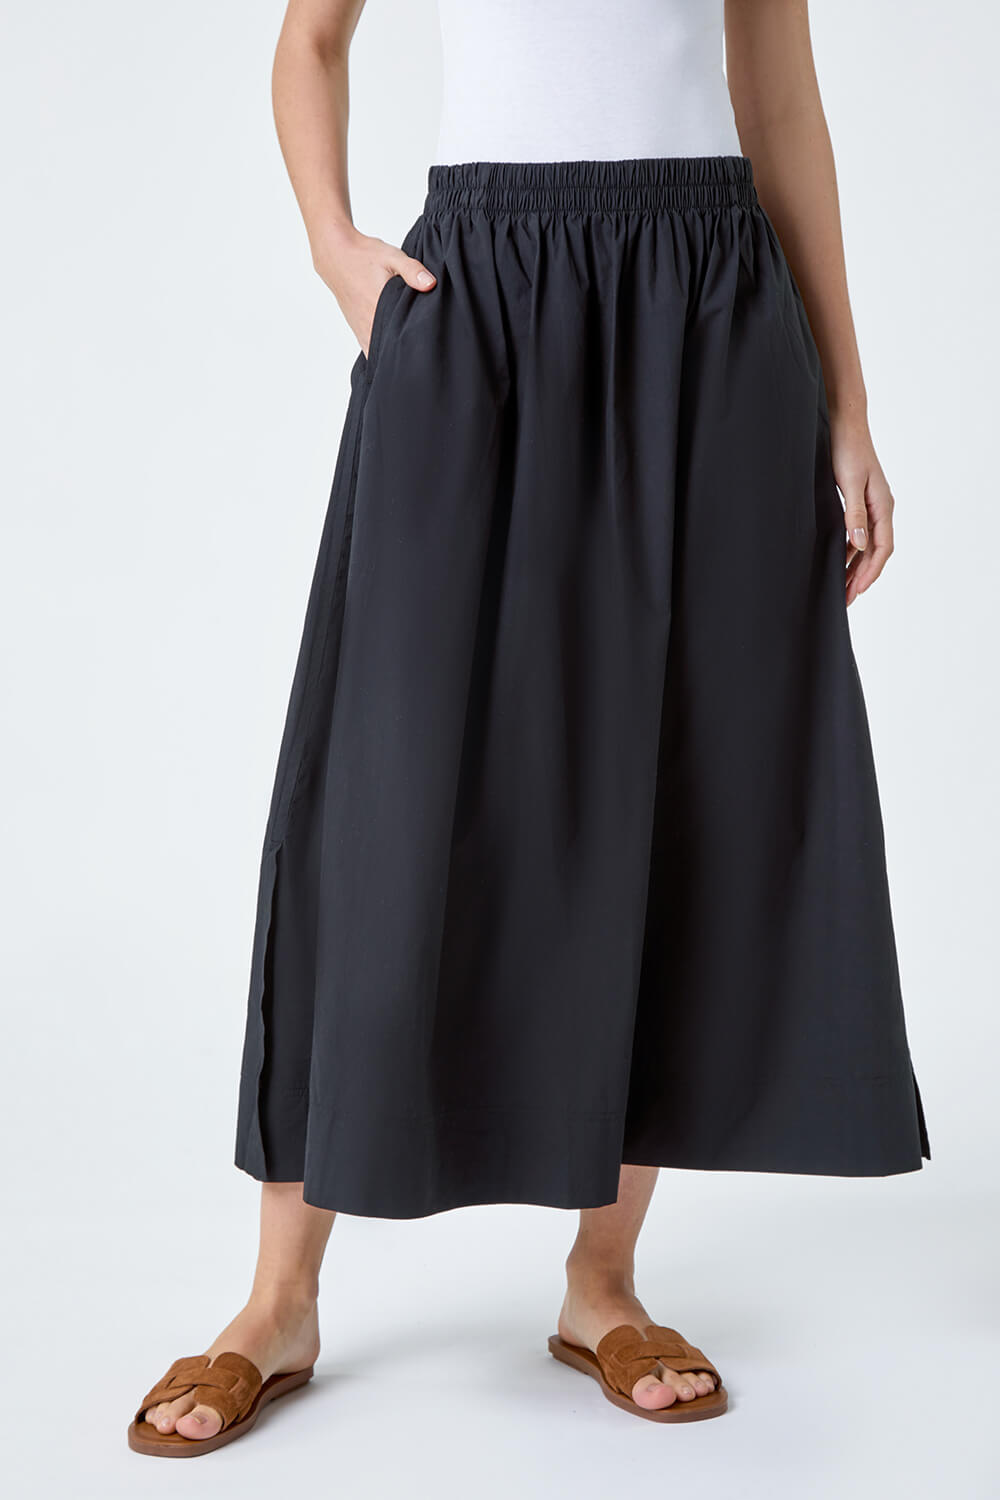 Black Cotton Poplin Pocket Skirt, Image 4 of 5